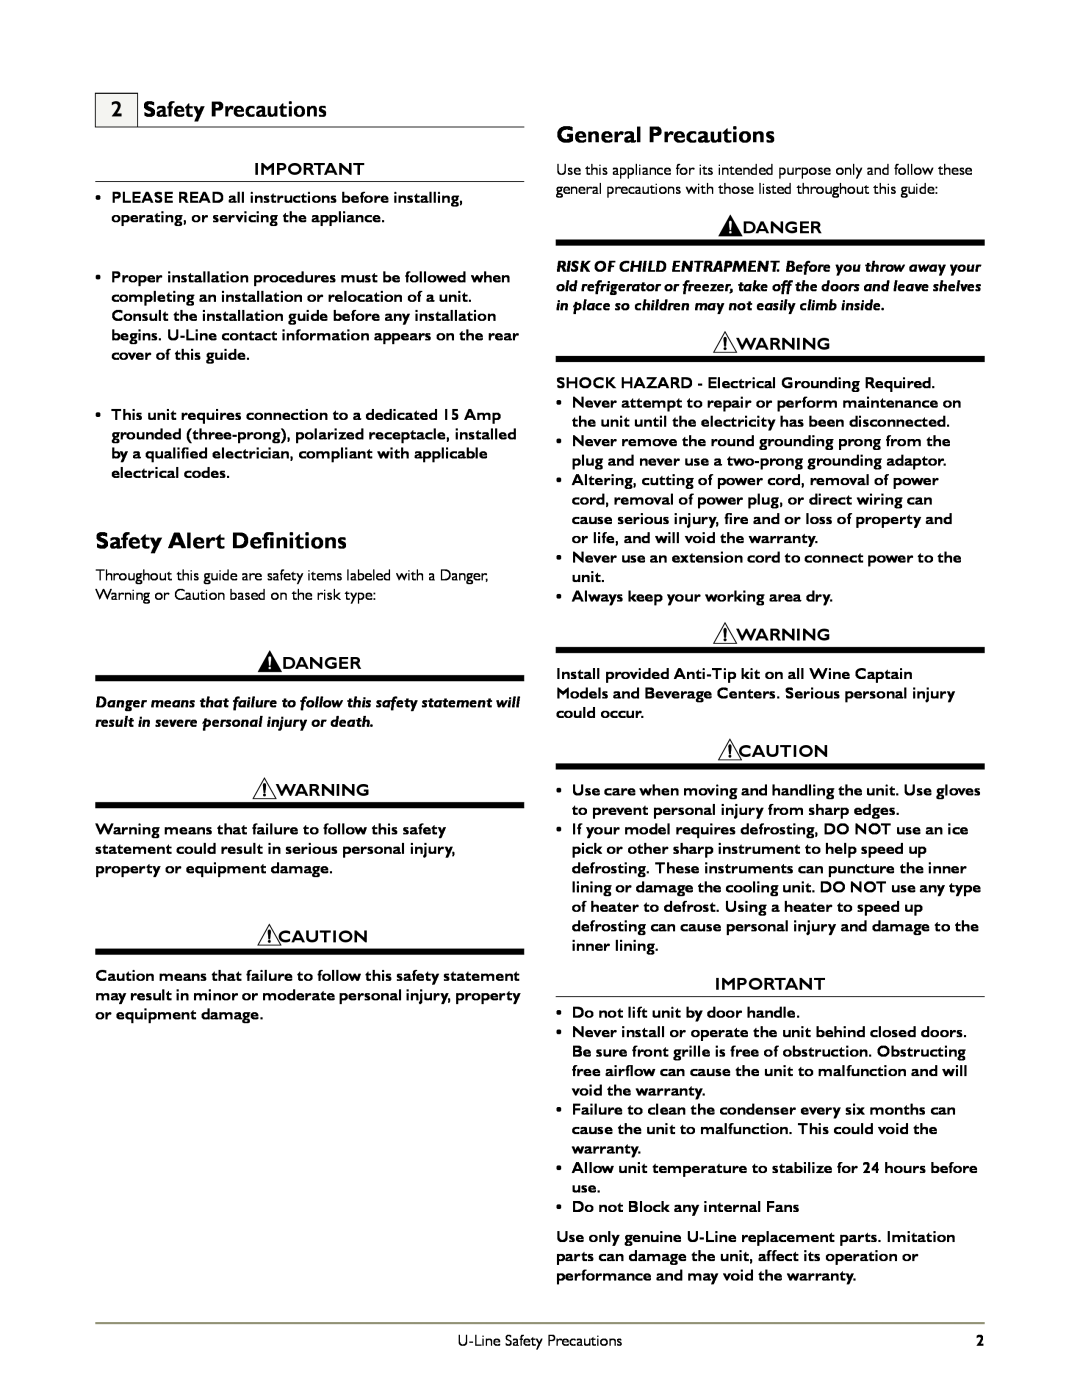 U-Line SP18, CO1175 manual Safety Alert Definitions, General Precautions, Safety Precautions, Danger 